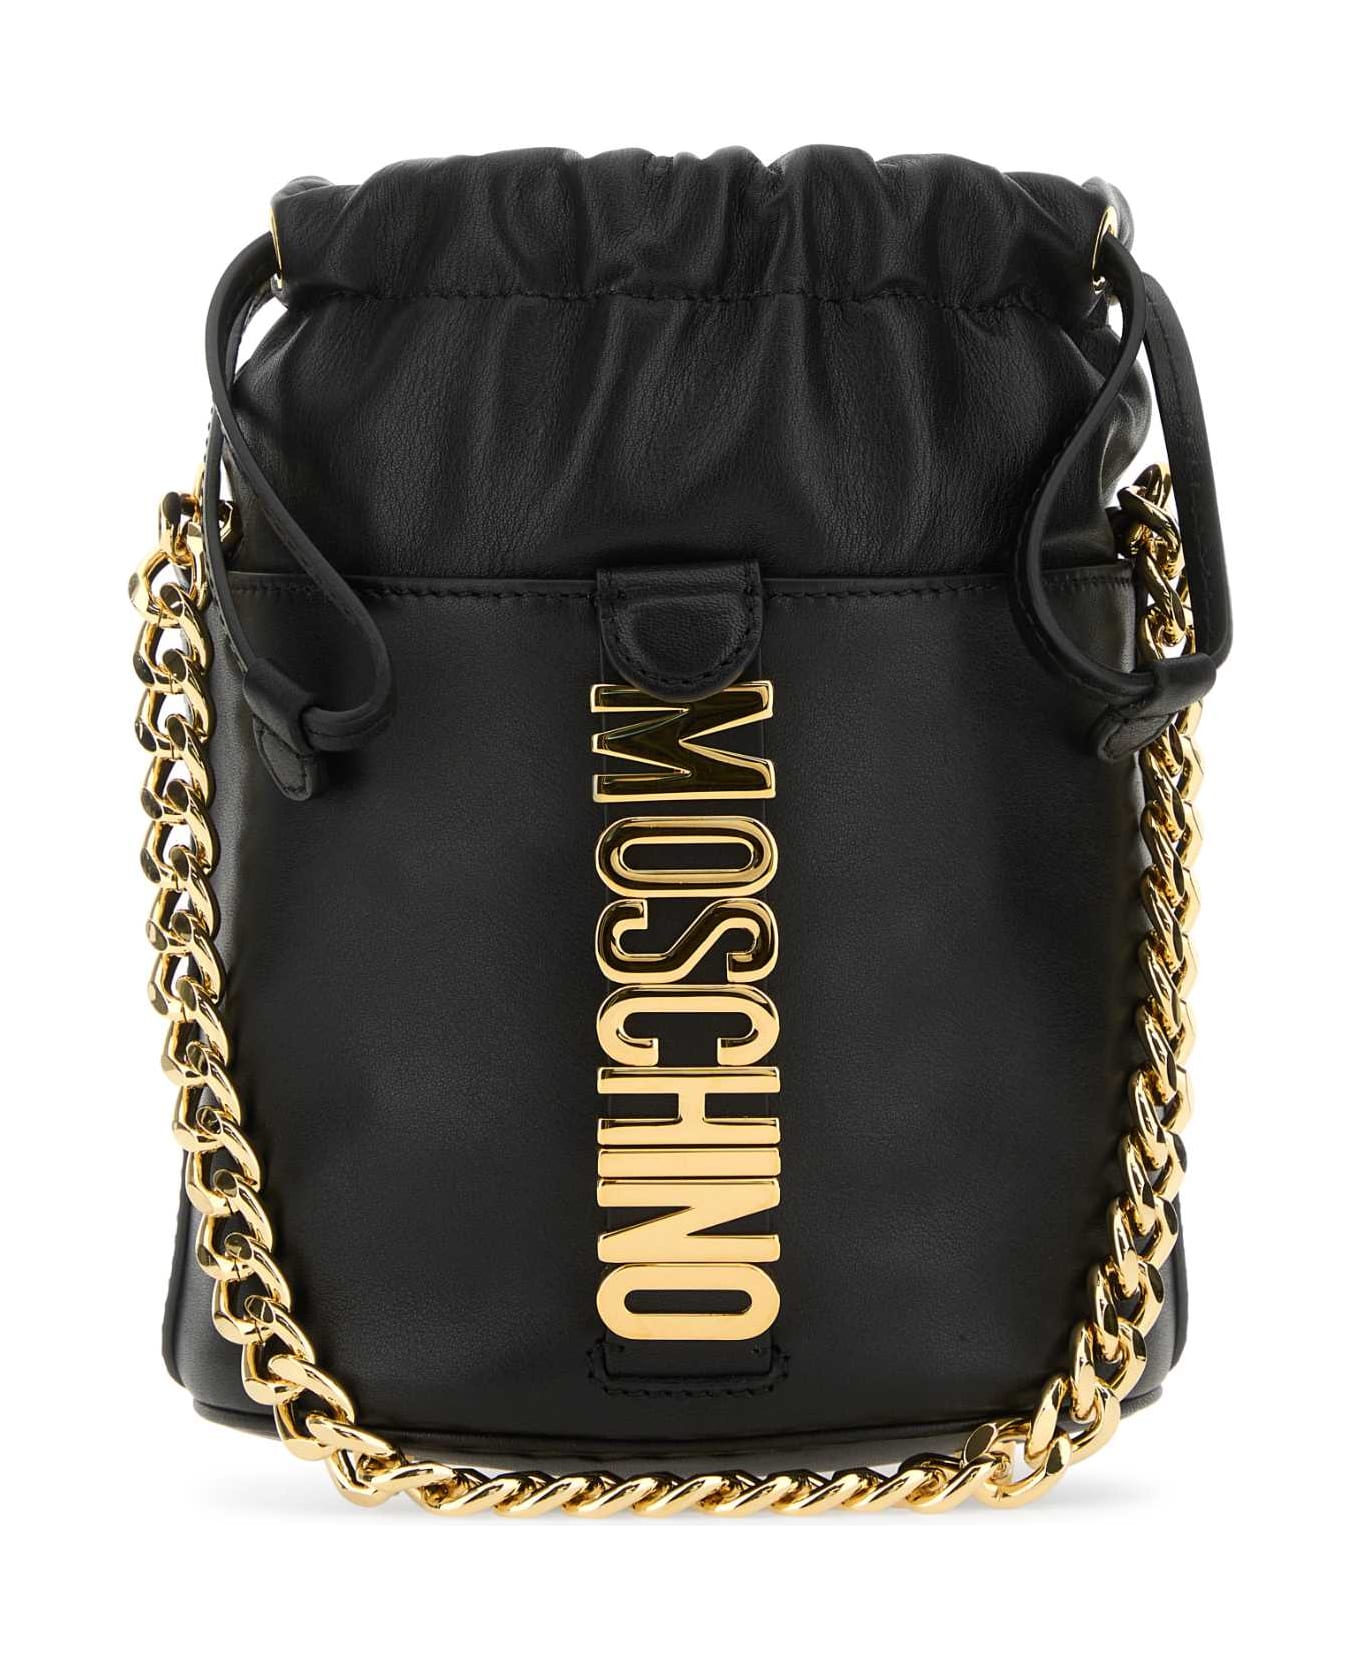 Moschino Black Leather Bucket Bag - NERO